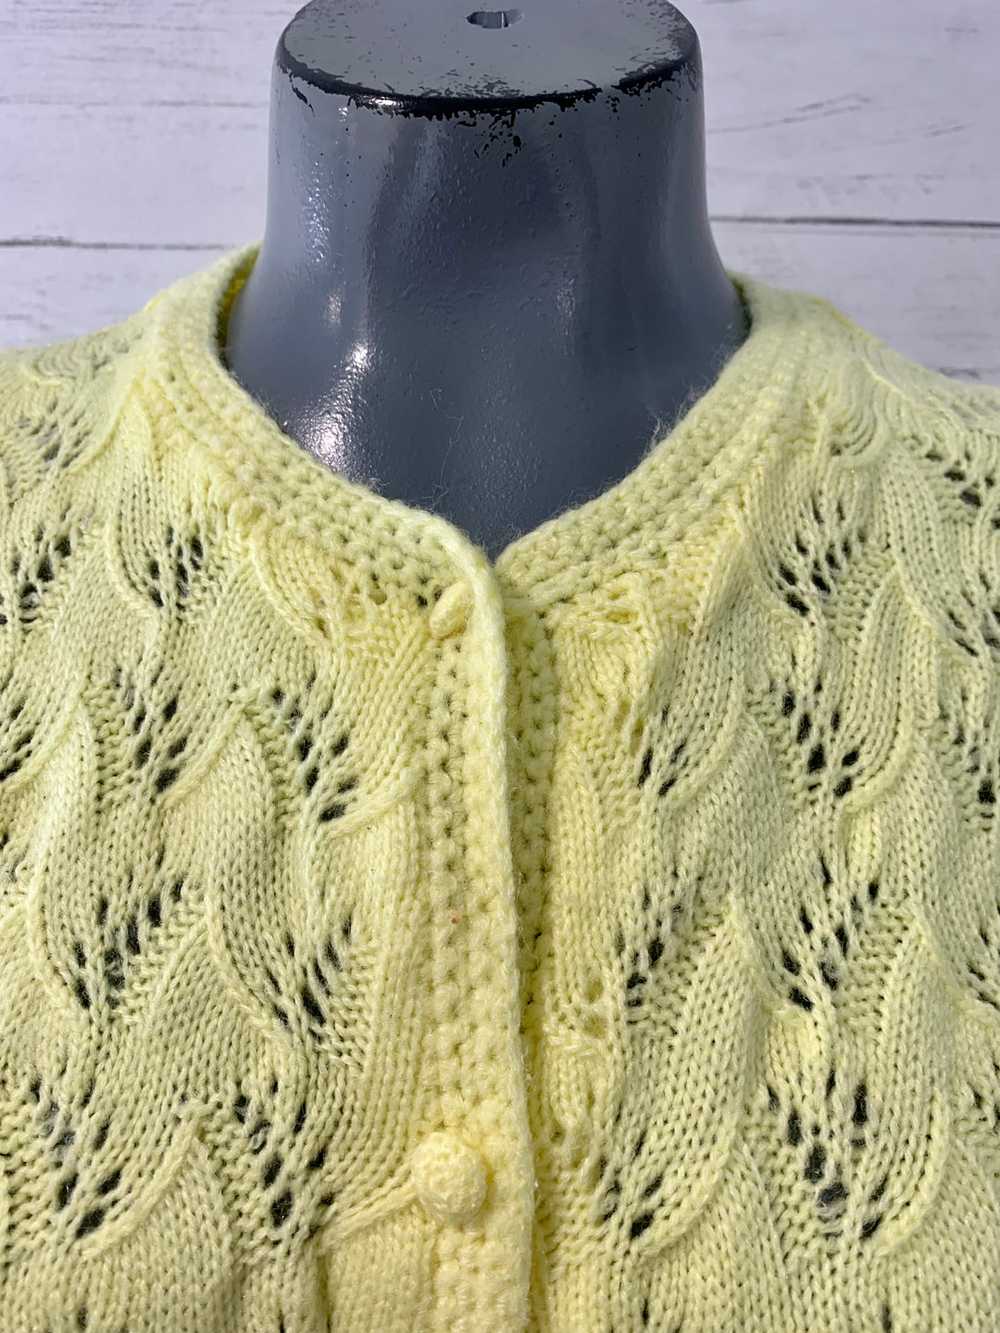 70’s Bright Yellow Knit Cardigan Sweater - image 3